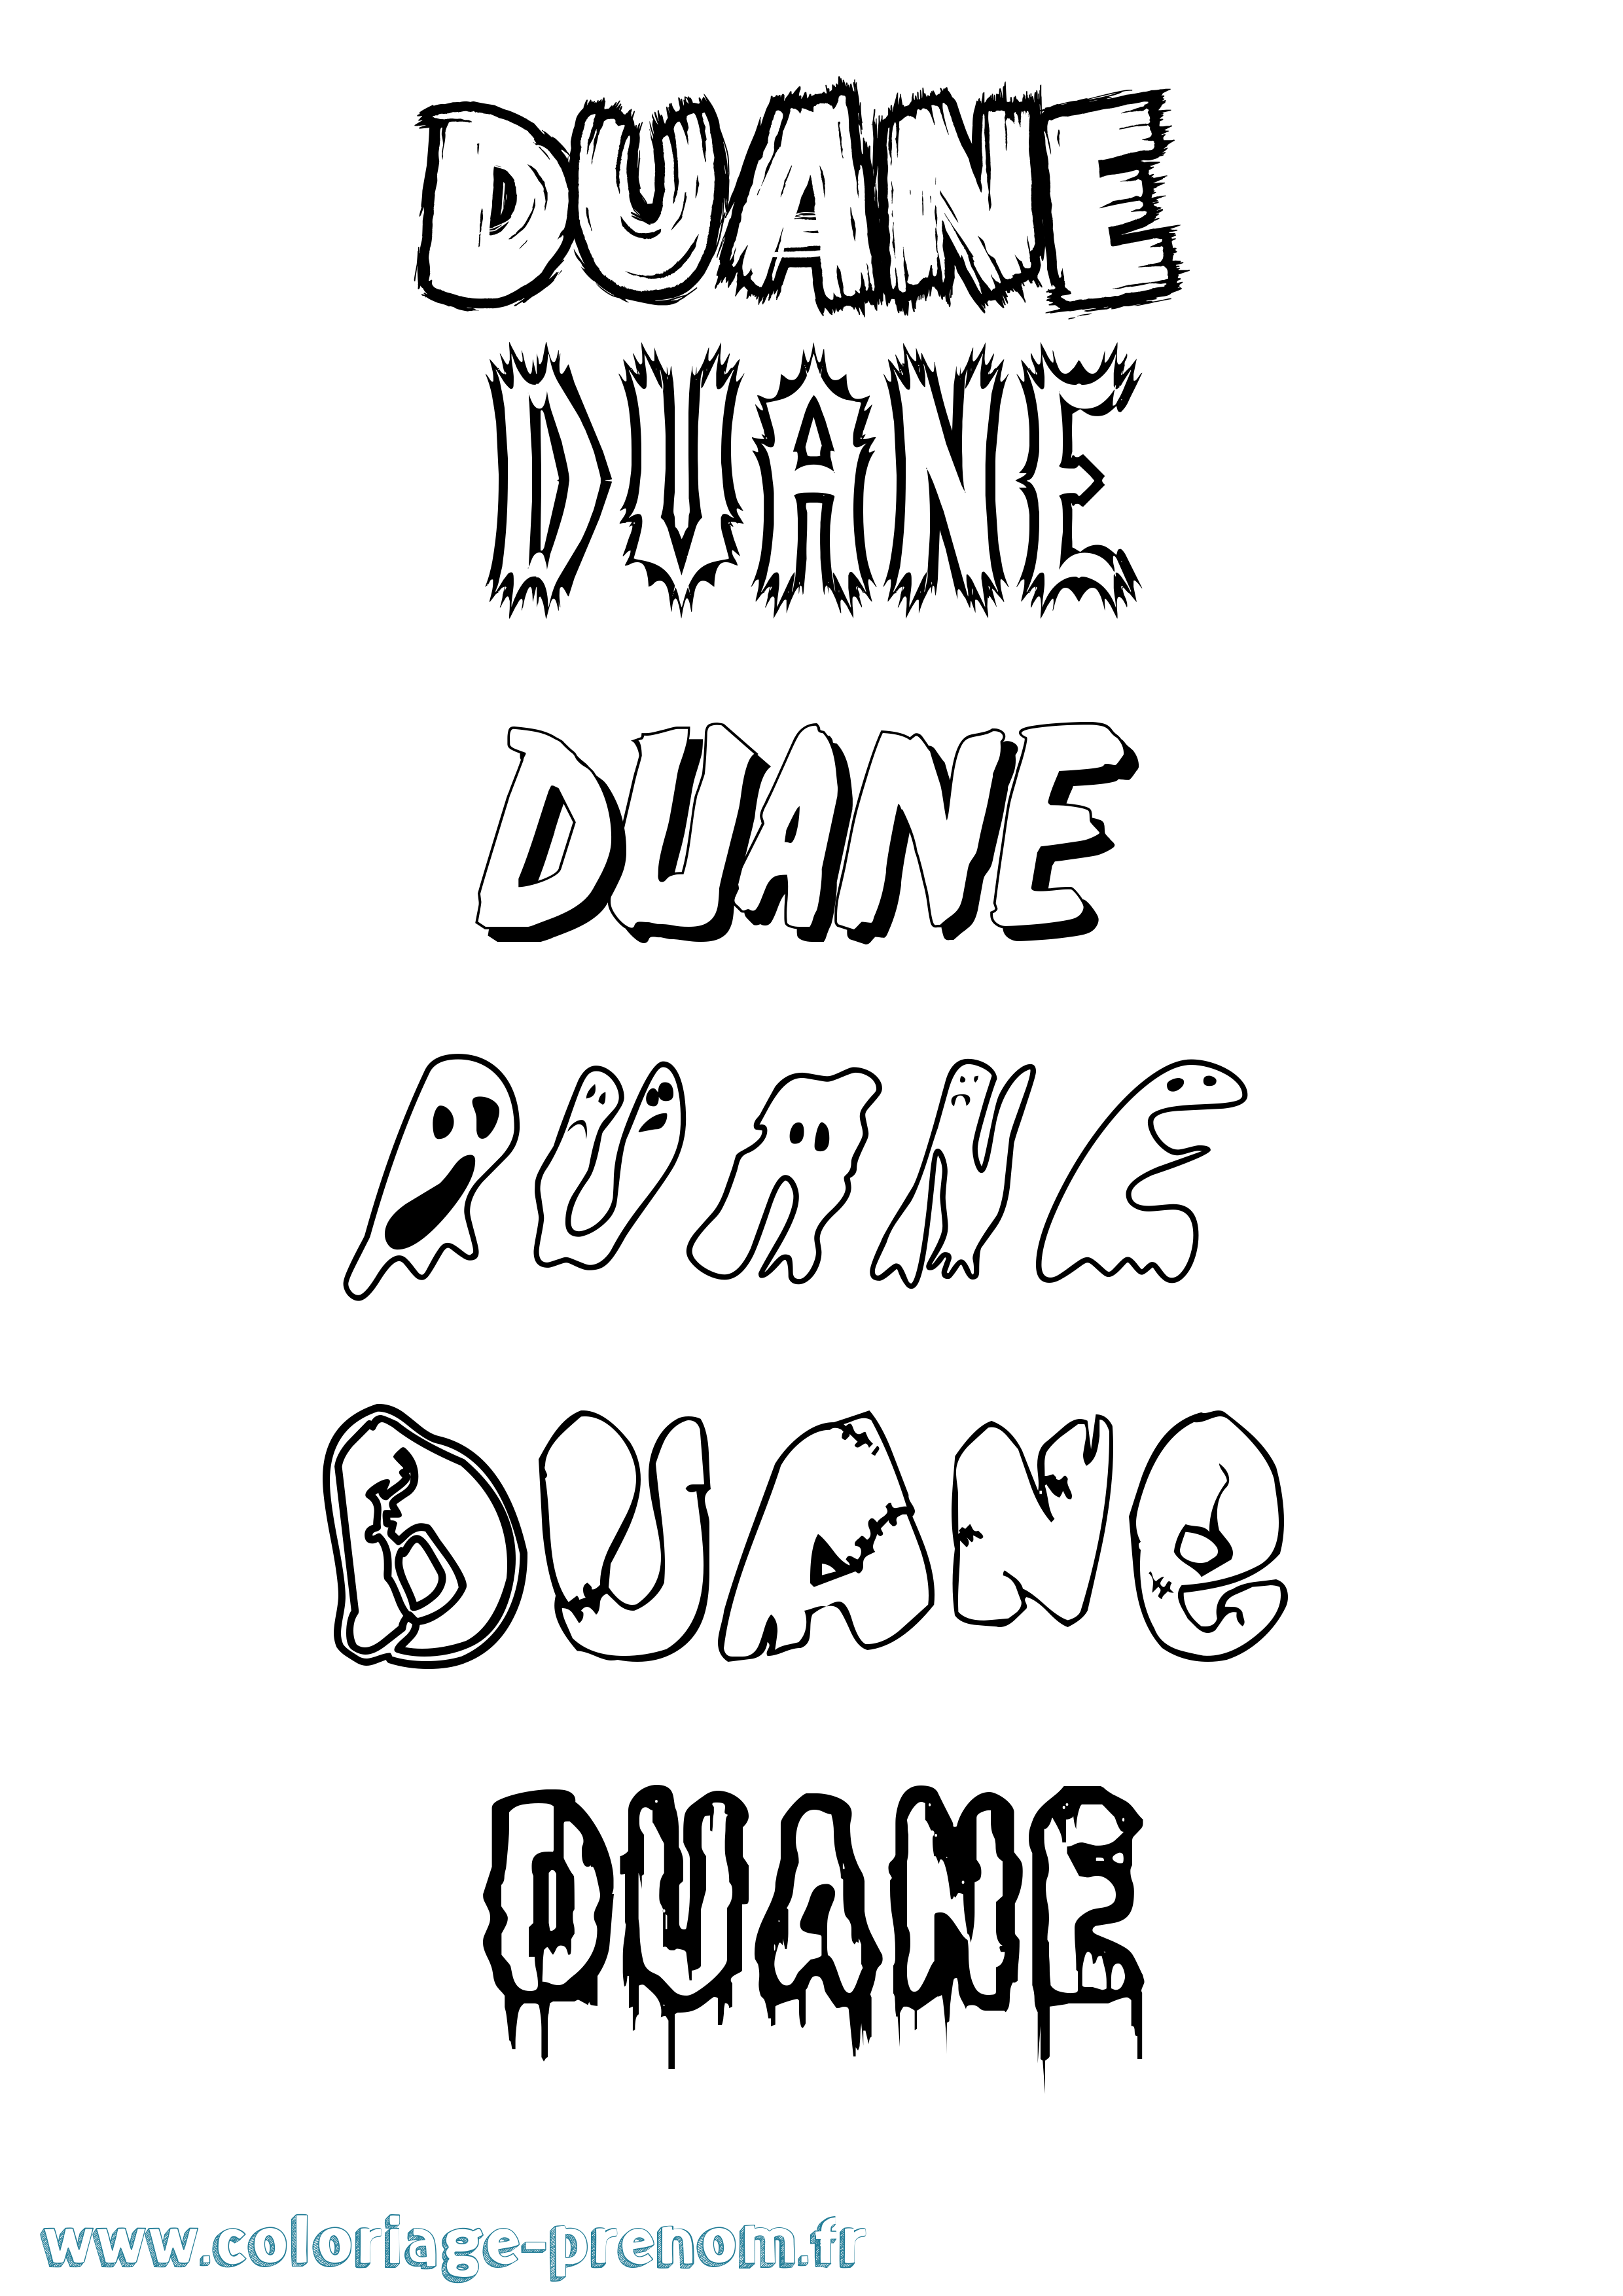 Coloriage prénom Duane Frisson